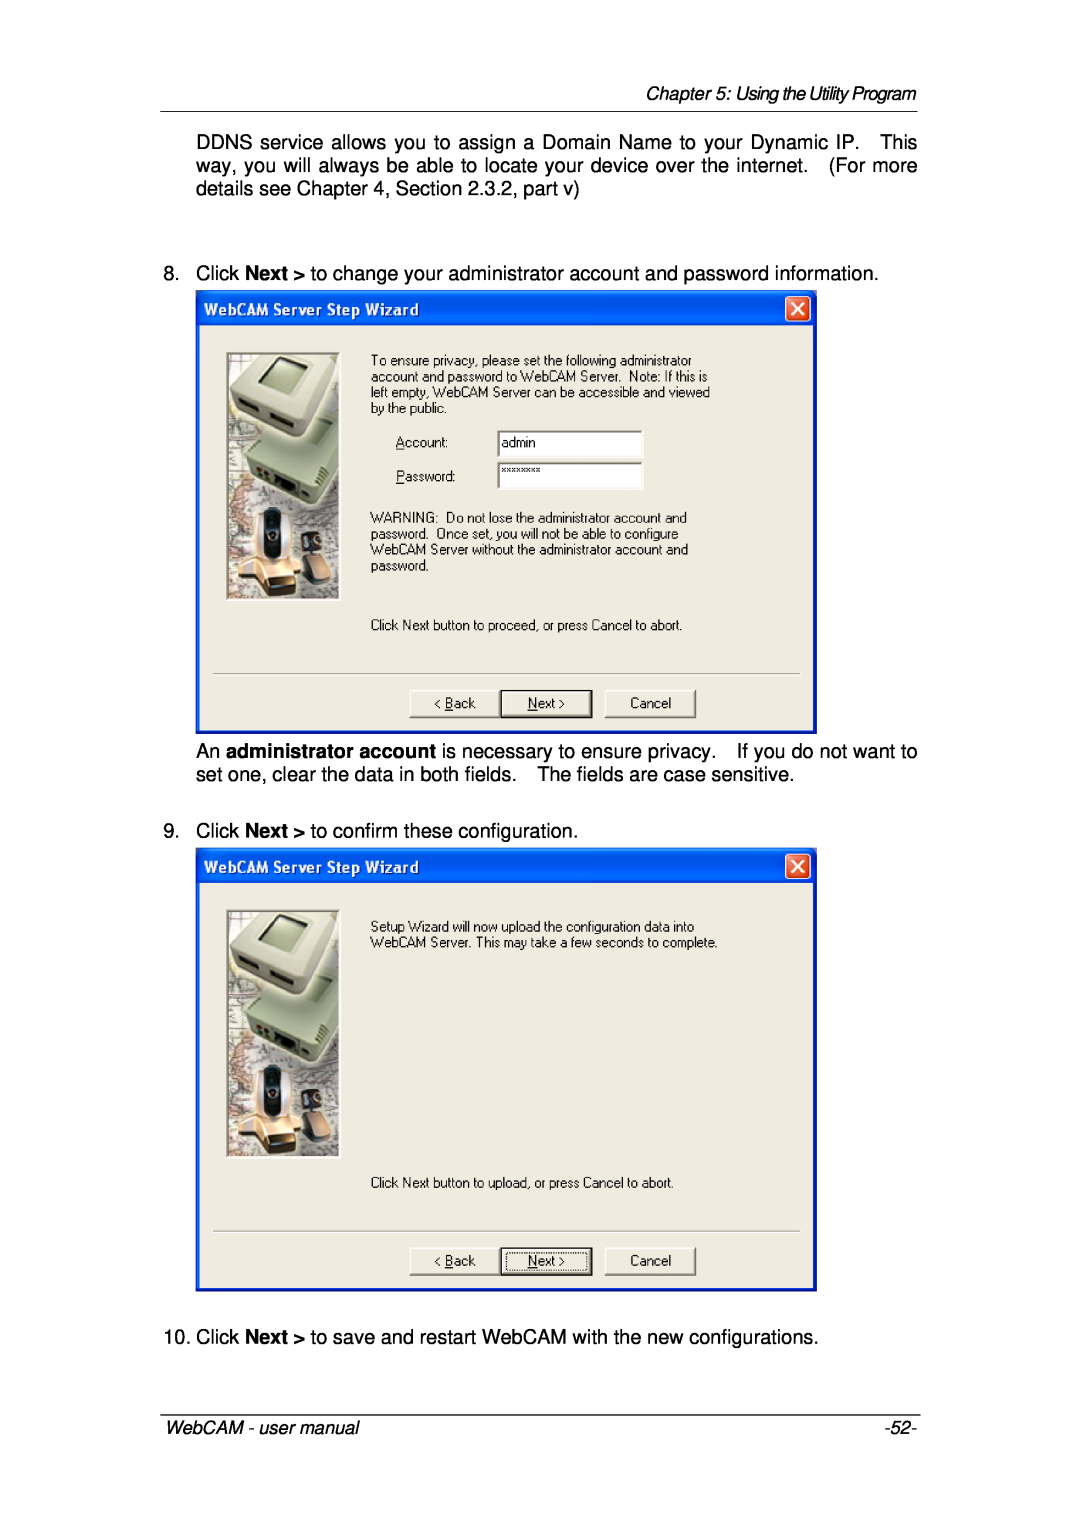 3Com iCV-08, iCV-01a, iCV-03a user manual Click Next to confirm these configuration 